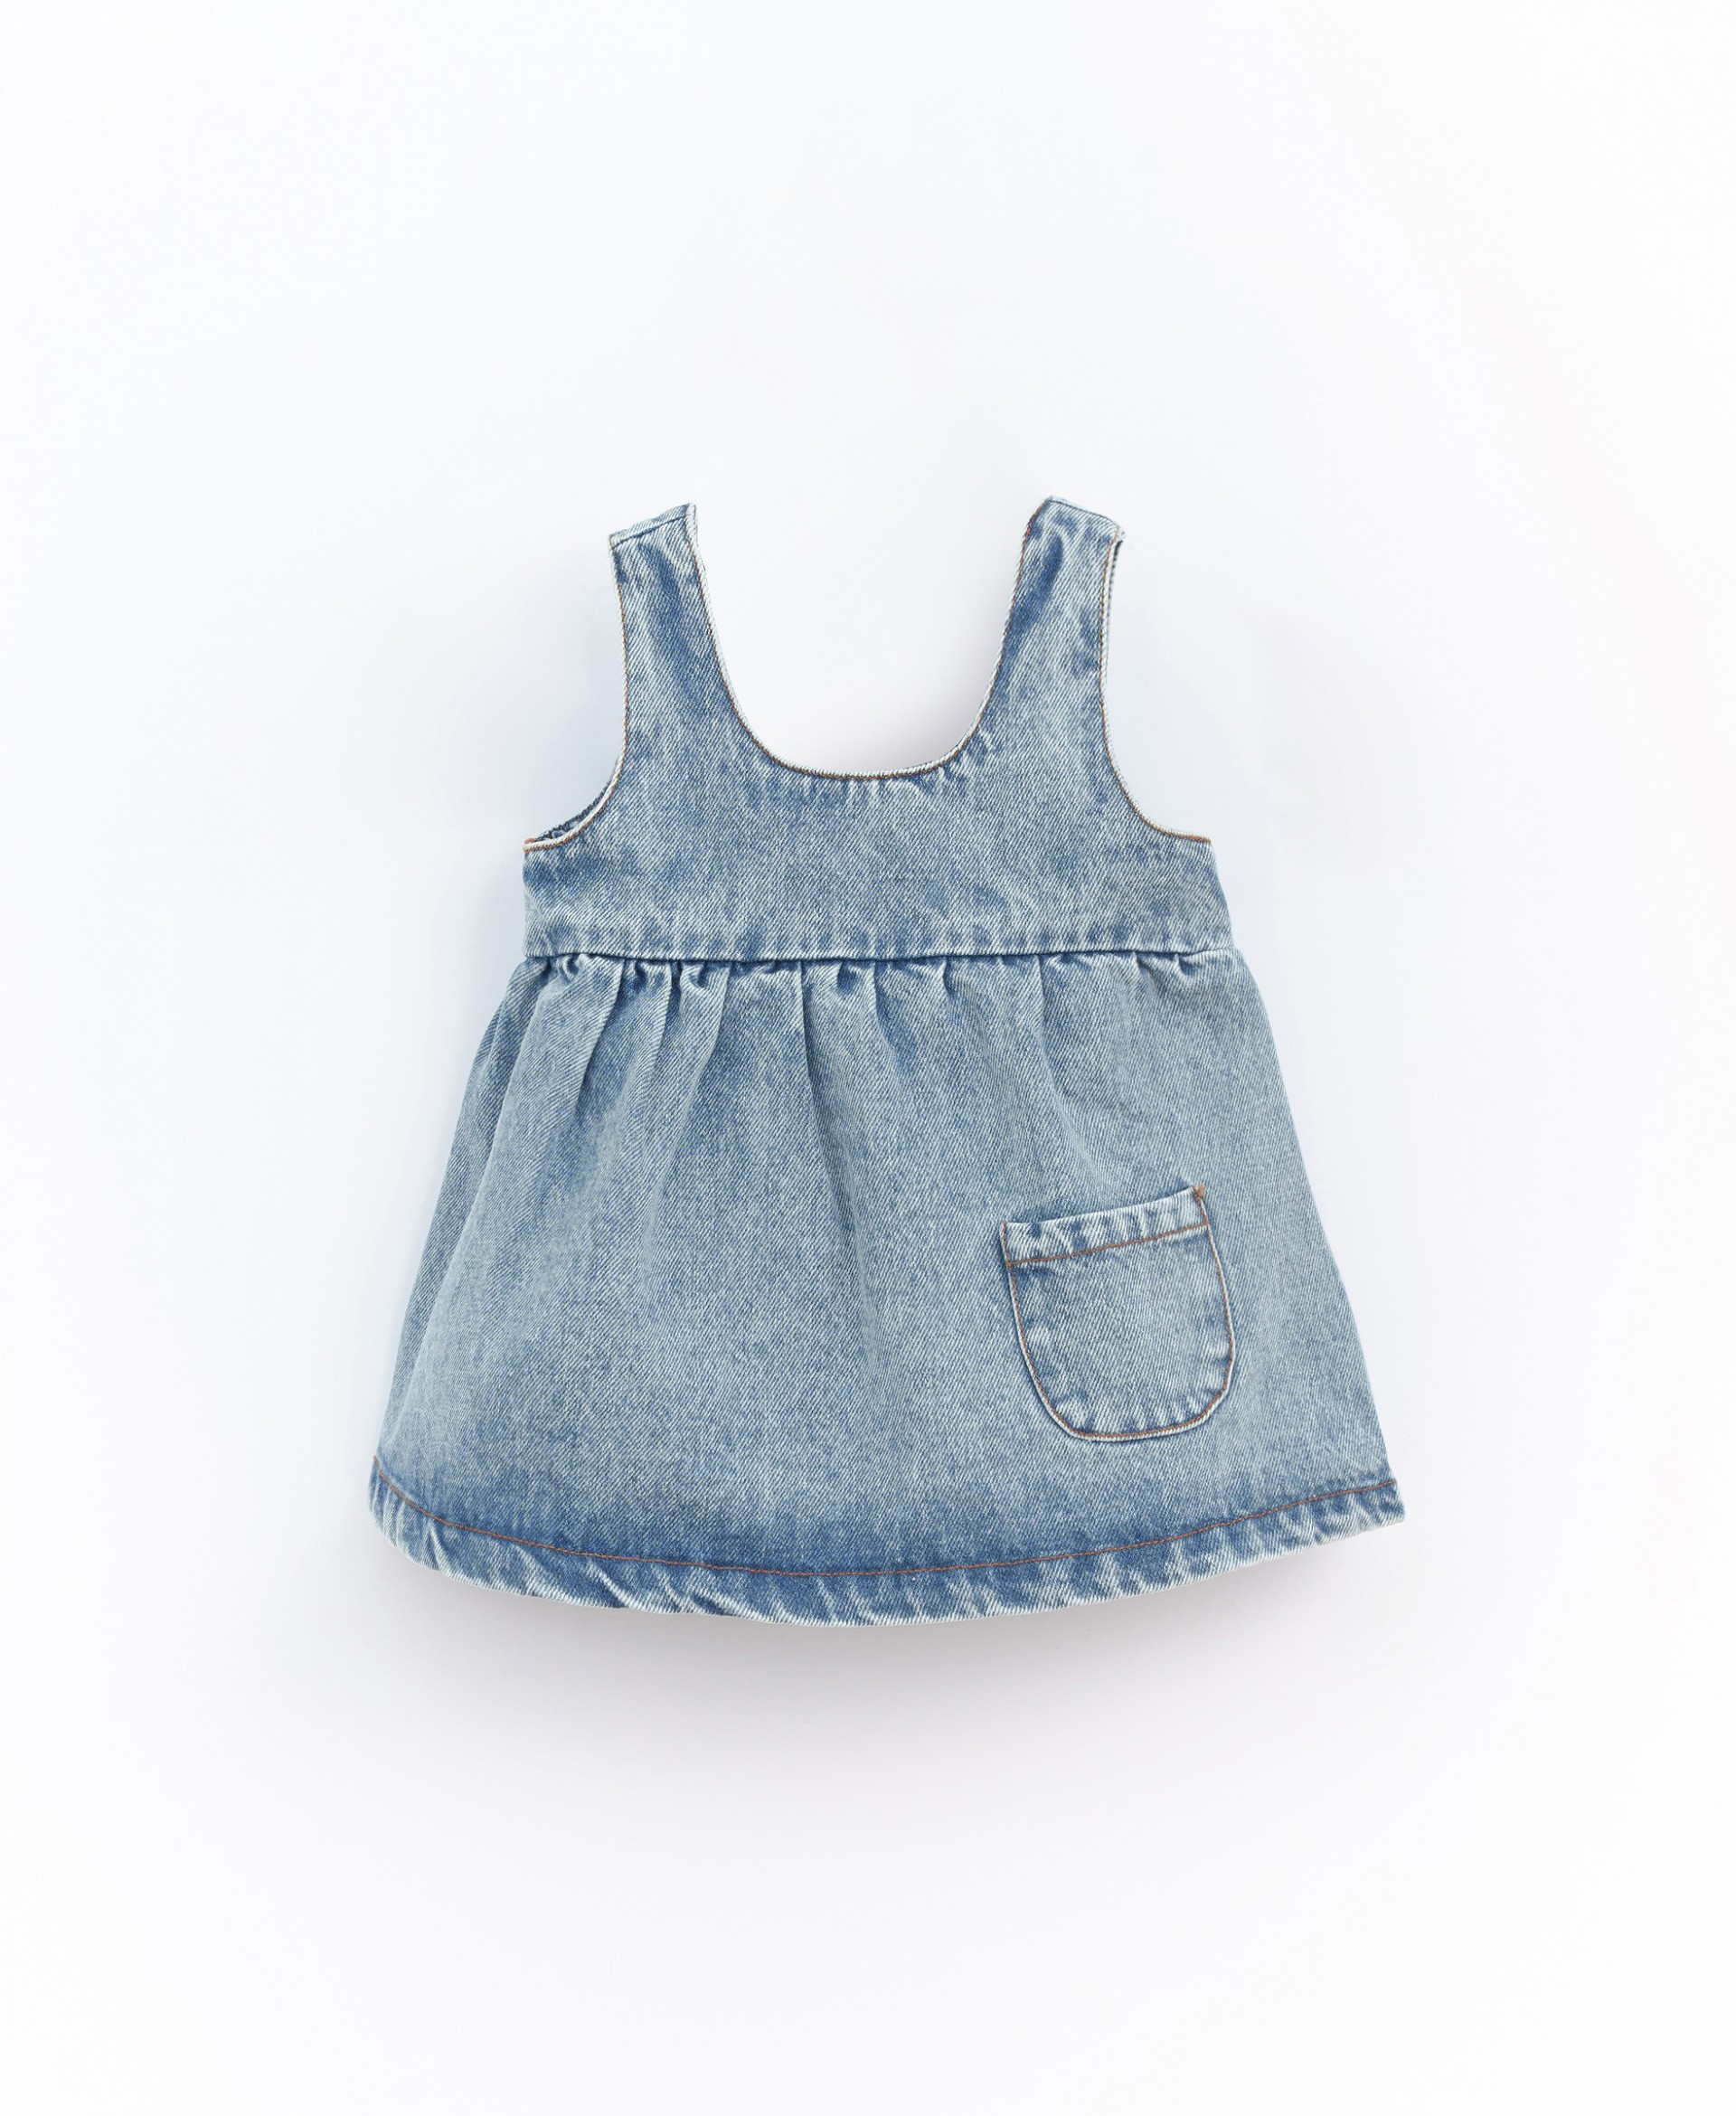 Denim dress for baby girl /by Kushi maqbool ideas - YouTube-daiichi.edu.vn